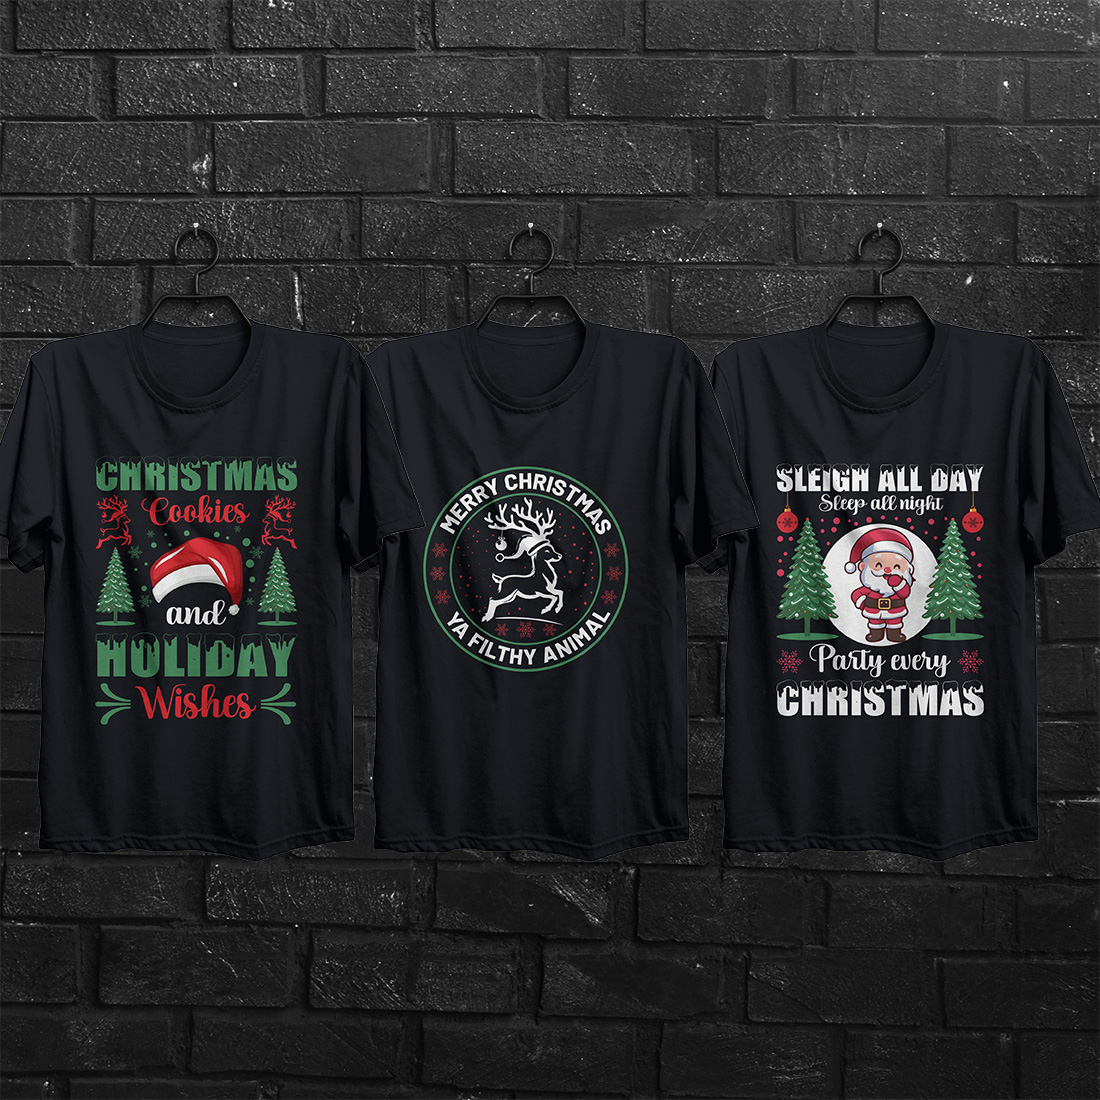 Christmas T-shirt Design Bundle cover image.